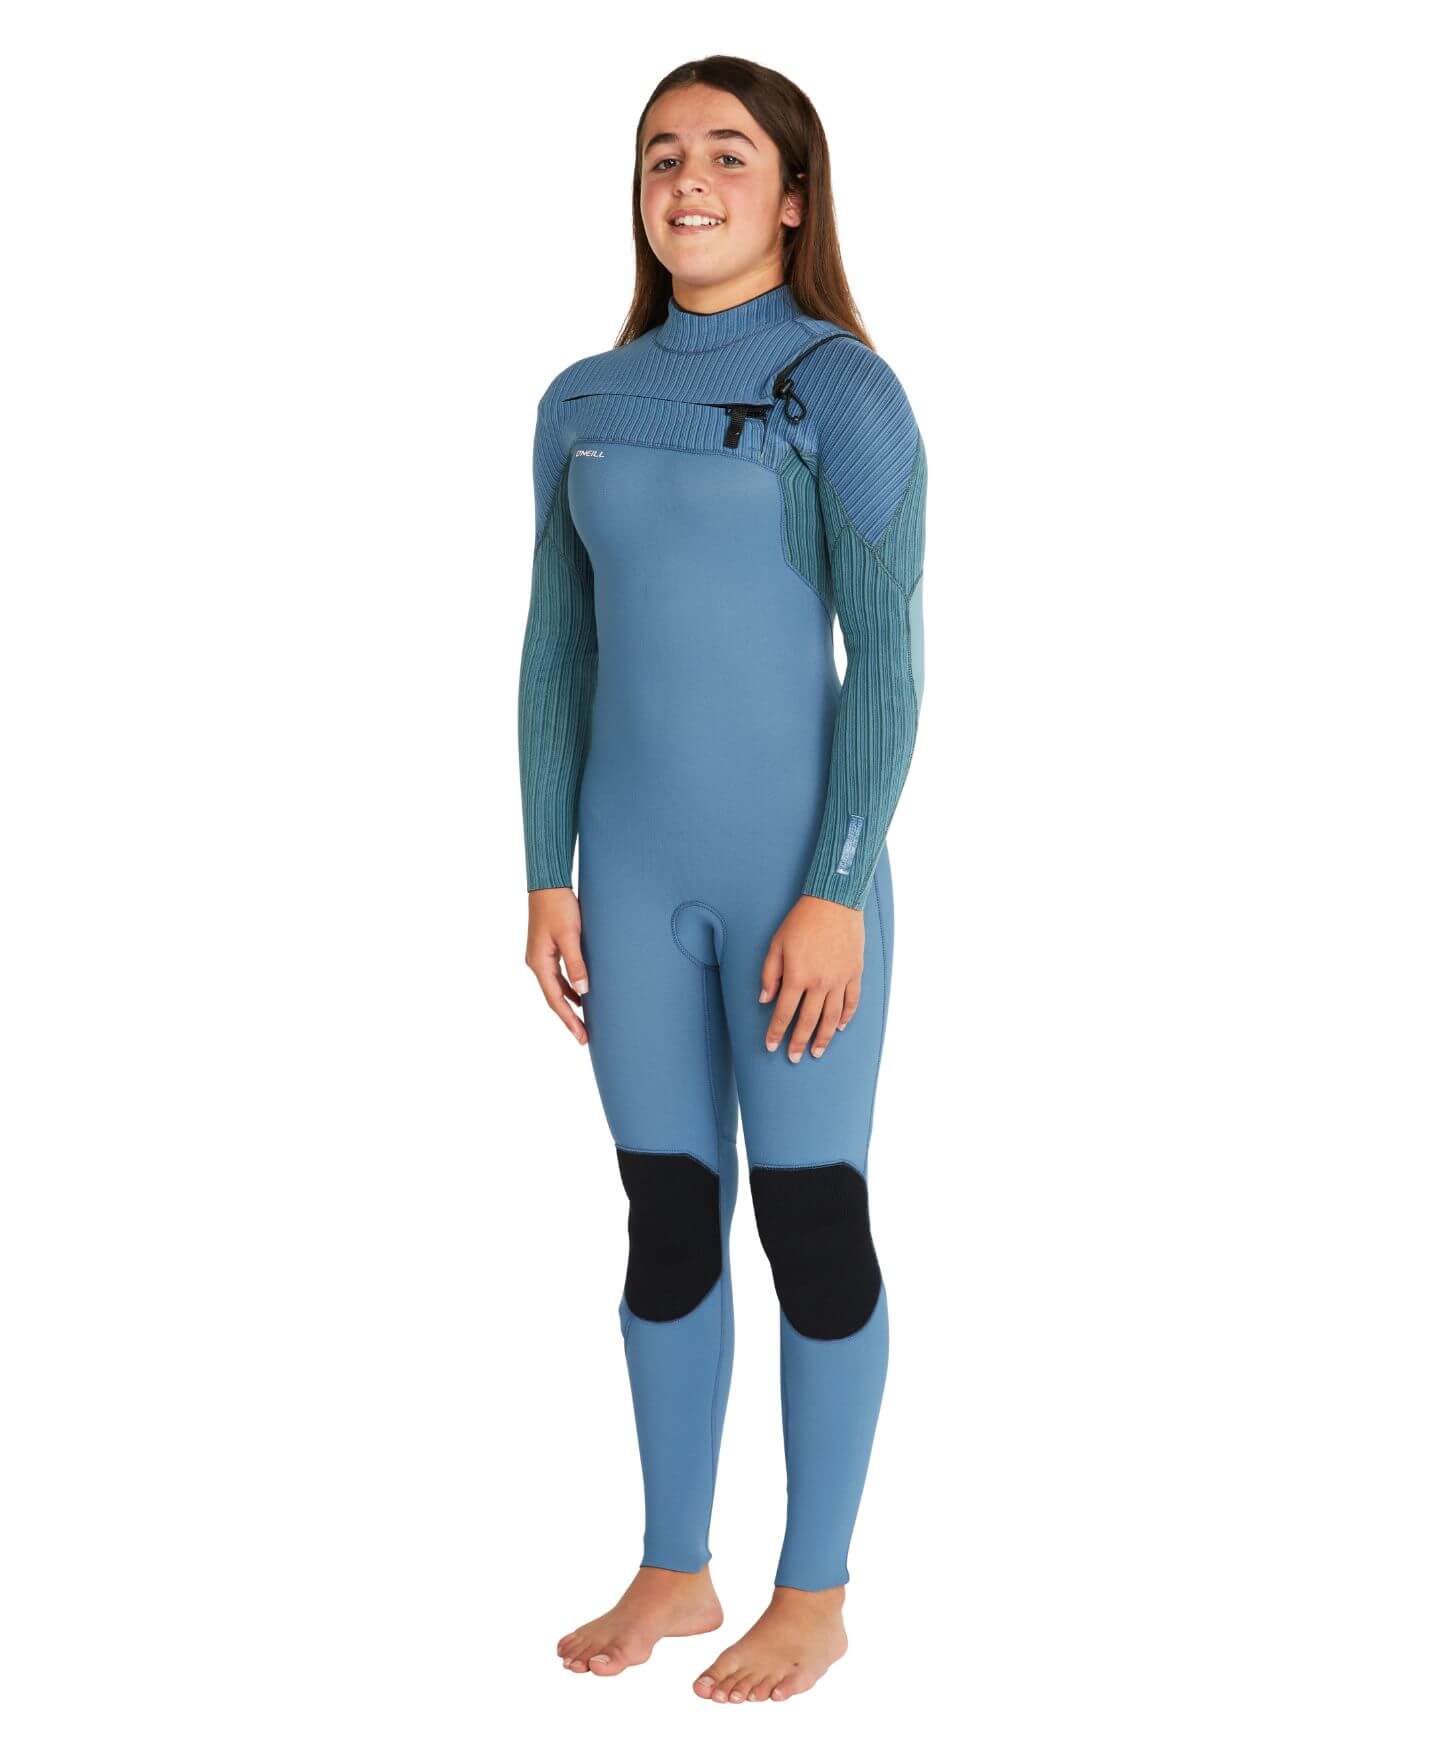 Girl's Hyperfreak 3/2+ Steamer Chest Zip Wetsuit - Dusty Blue